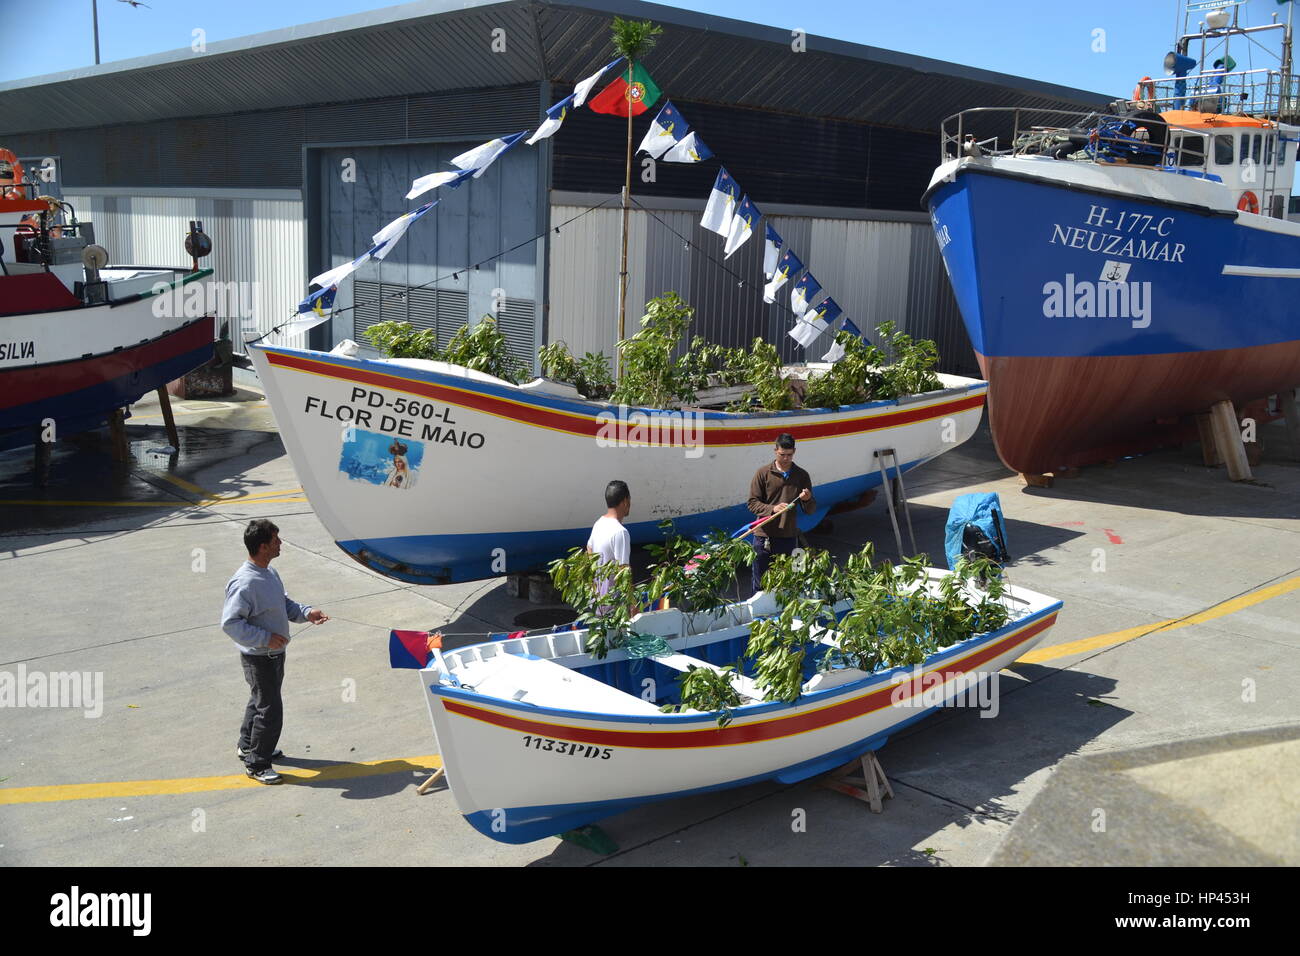 Nice motor boat ashore at marine, Sao Miguel island, Azores archipelago, Portugal. Stock Photo